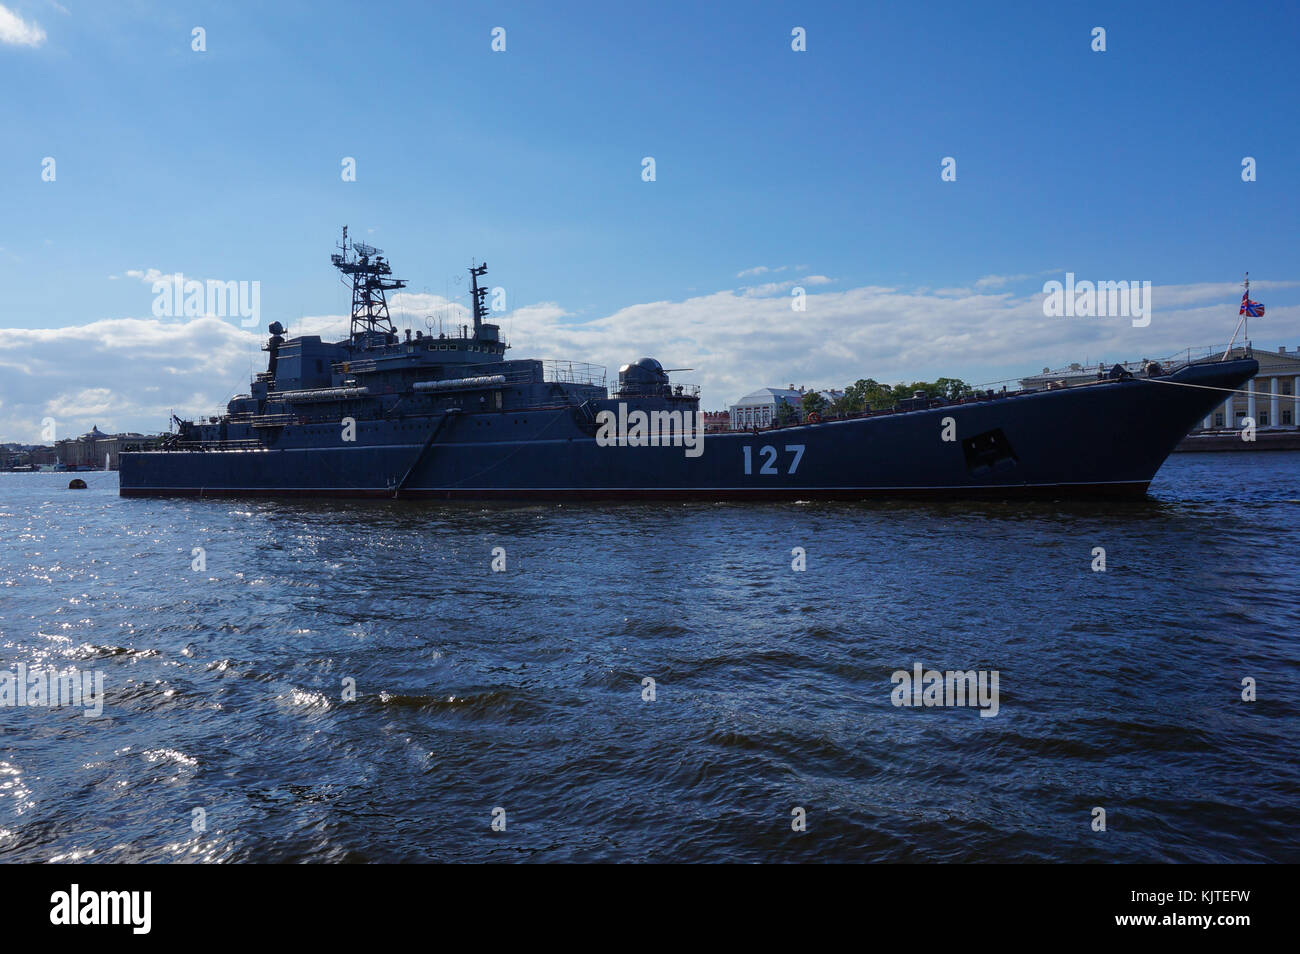 Saint Petersburg, Russia - 27.07.2015: Military ship on the Neva in Saint Petersburg Stock Photo